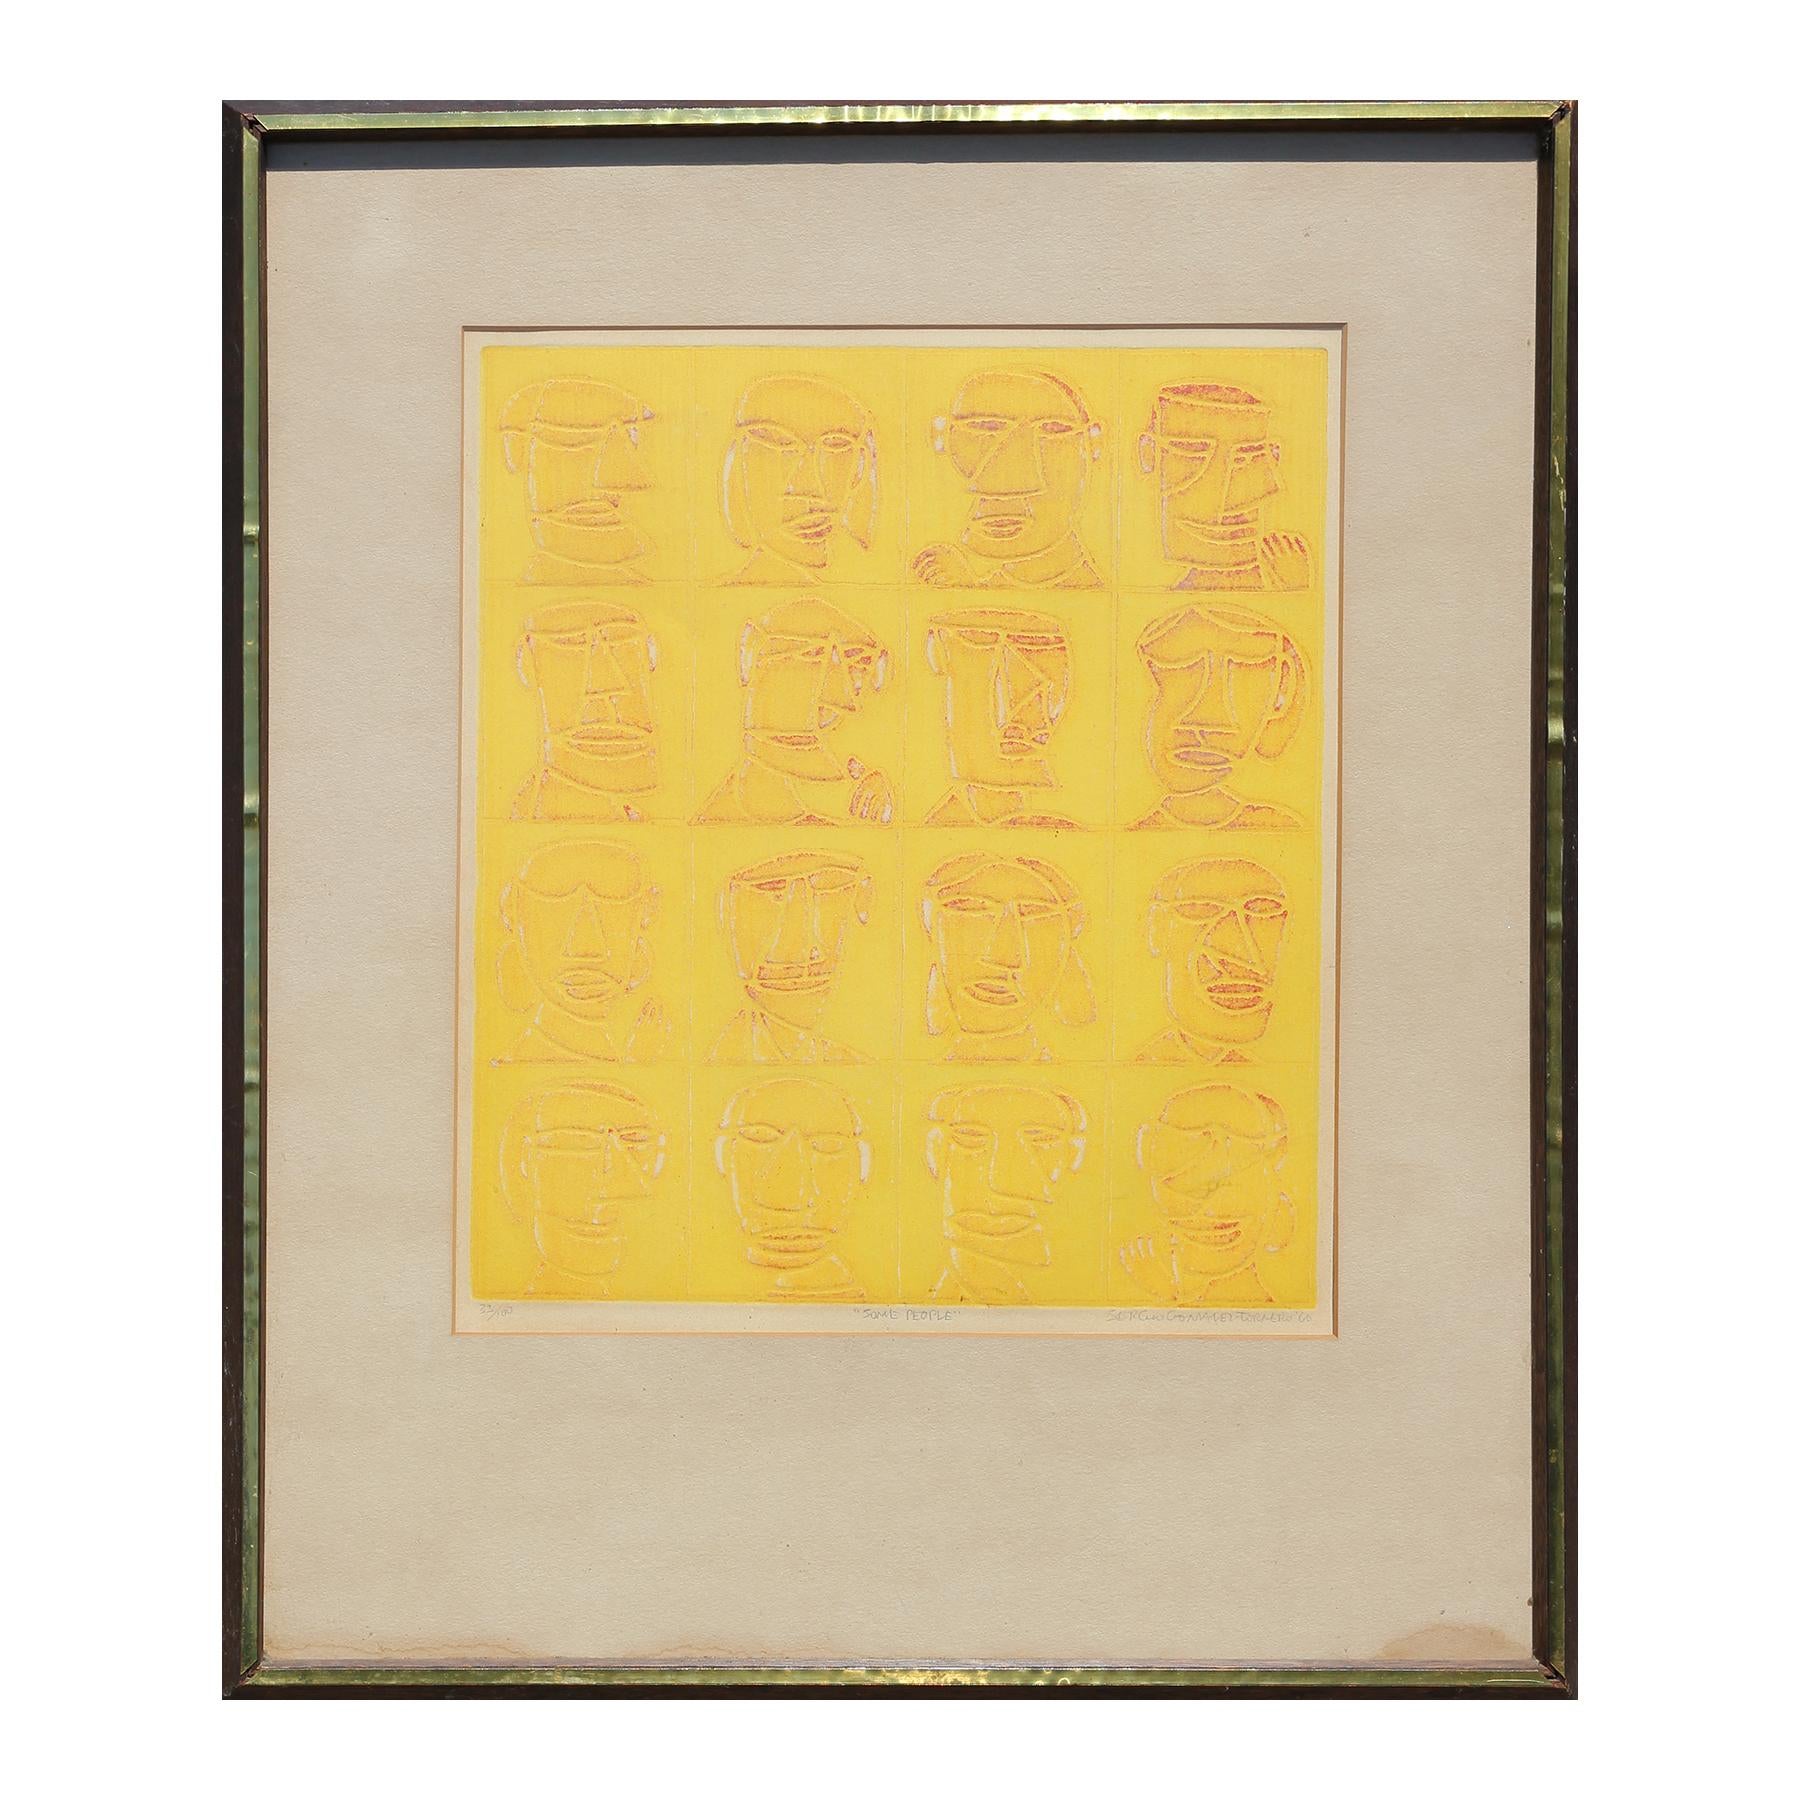 Sergio Gonzales-Tornero Figurative Print - “Some People” Ed. 33/100 Yellow Toned Abstract Figurative Faces Intaglio Print